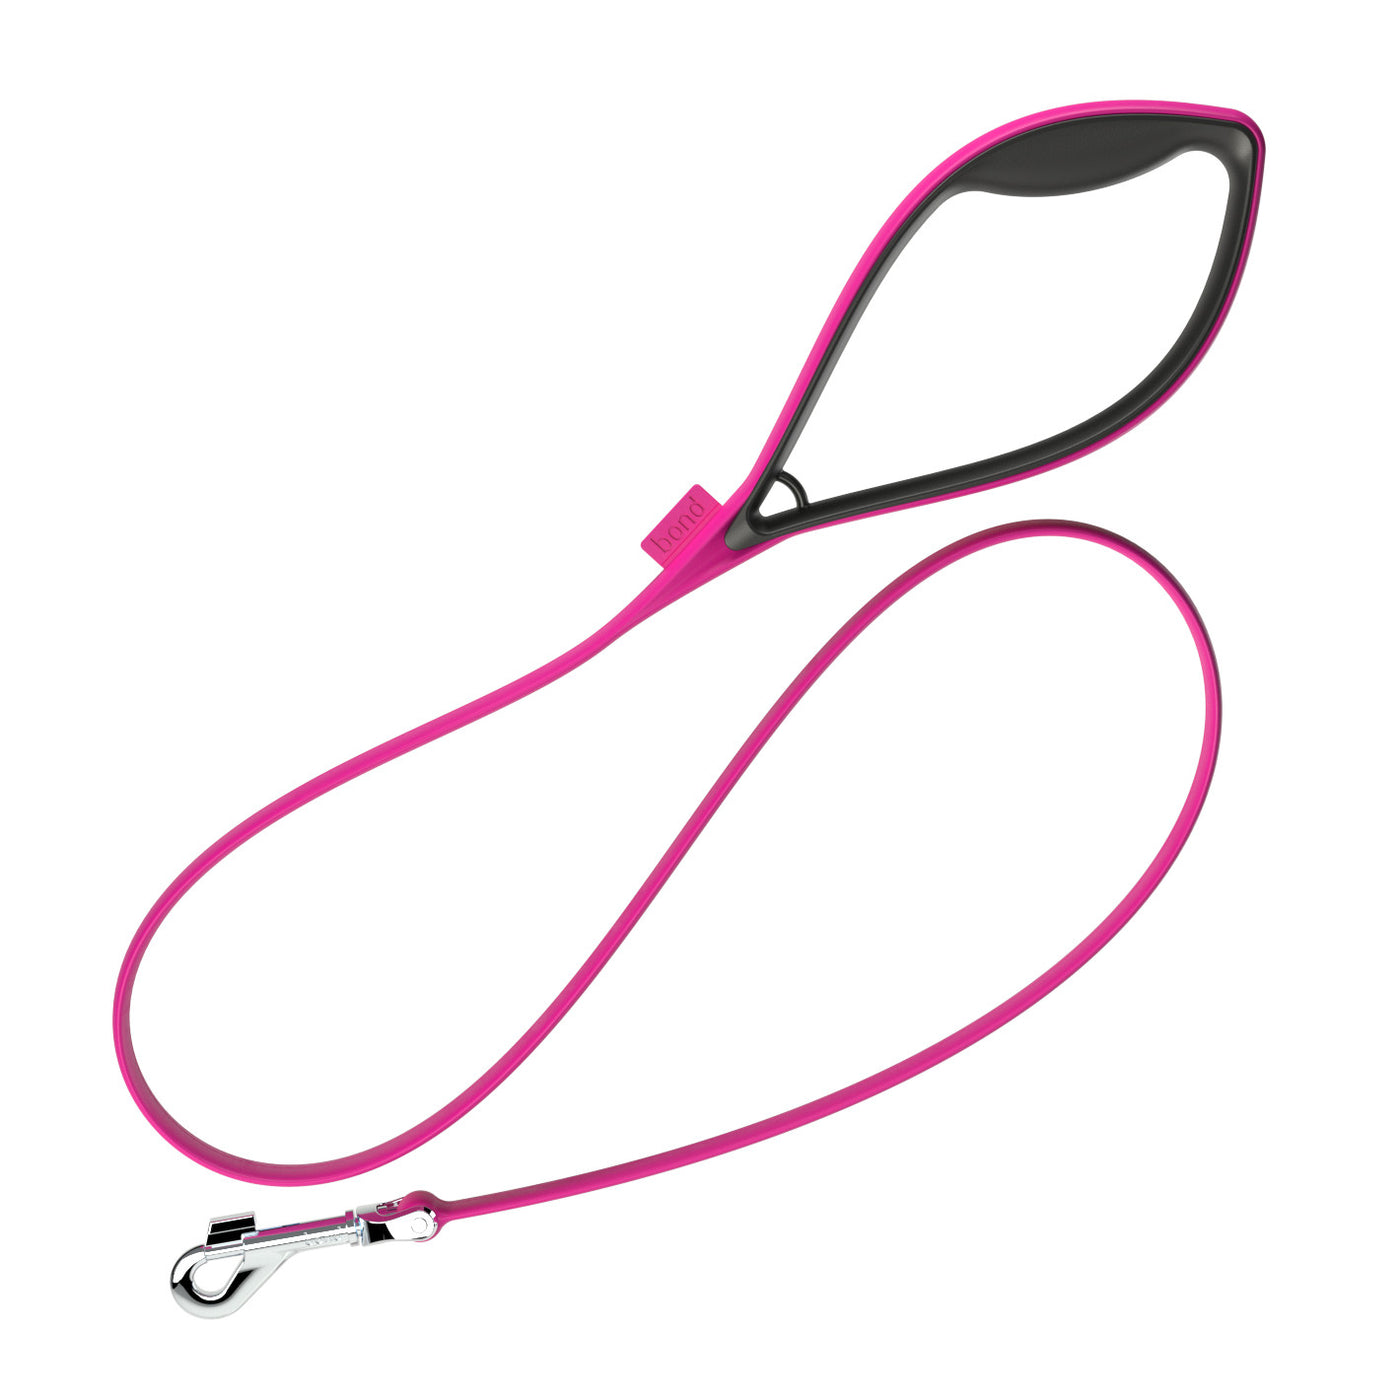 Shock absorbing pink dog leash